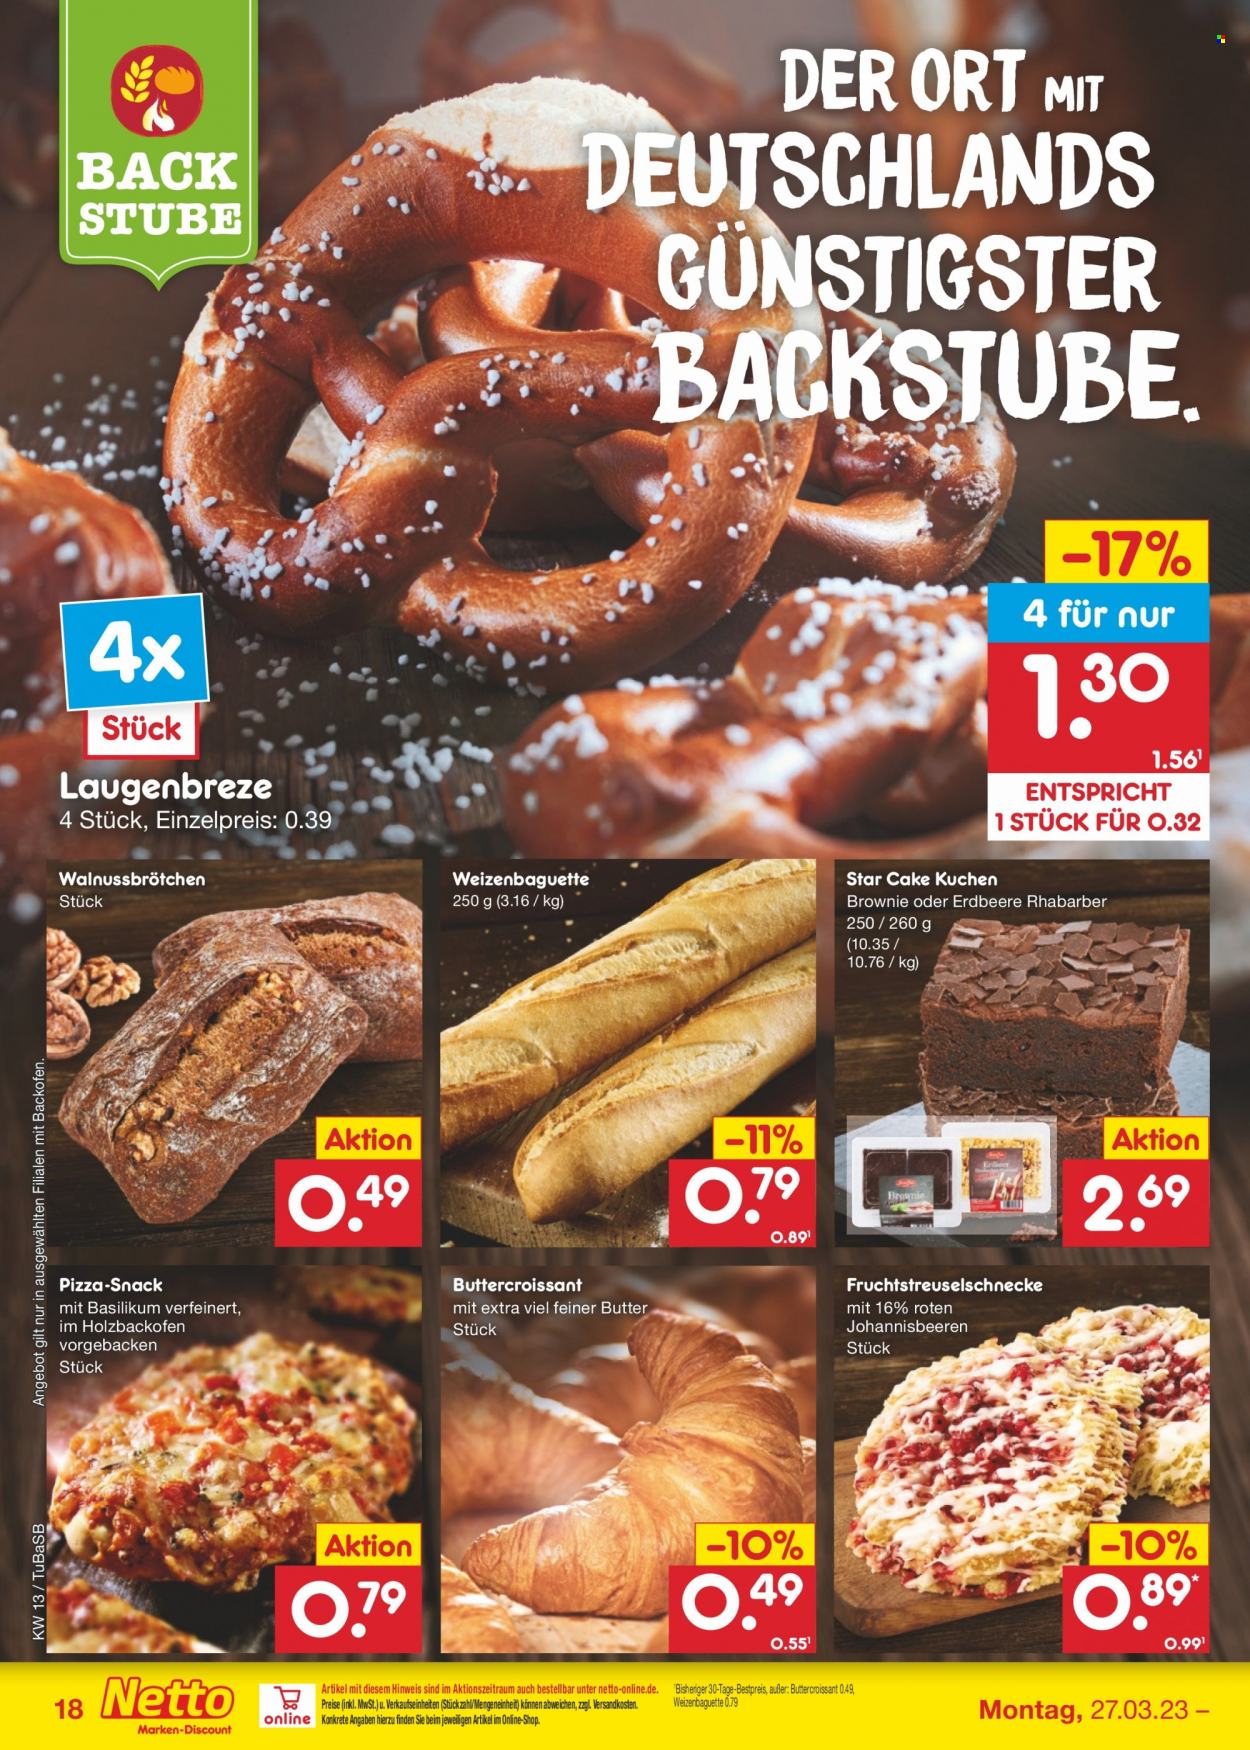 thumbnail - Prospekte Netto Marken-Discount - 27.03.2023 - 1.04.2023 - Produkte in Aktion - Baguette, salzig Gebäck, Walnussbrötchen, Croissant, Pizza Snack, Brezel, Laugenbrezel, Brownie, Kuchen, süßes Gebäck. Seite 18.